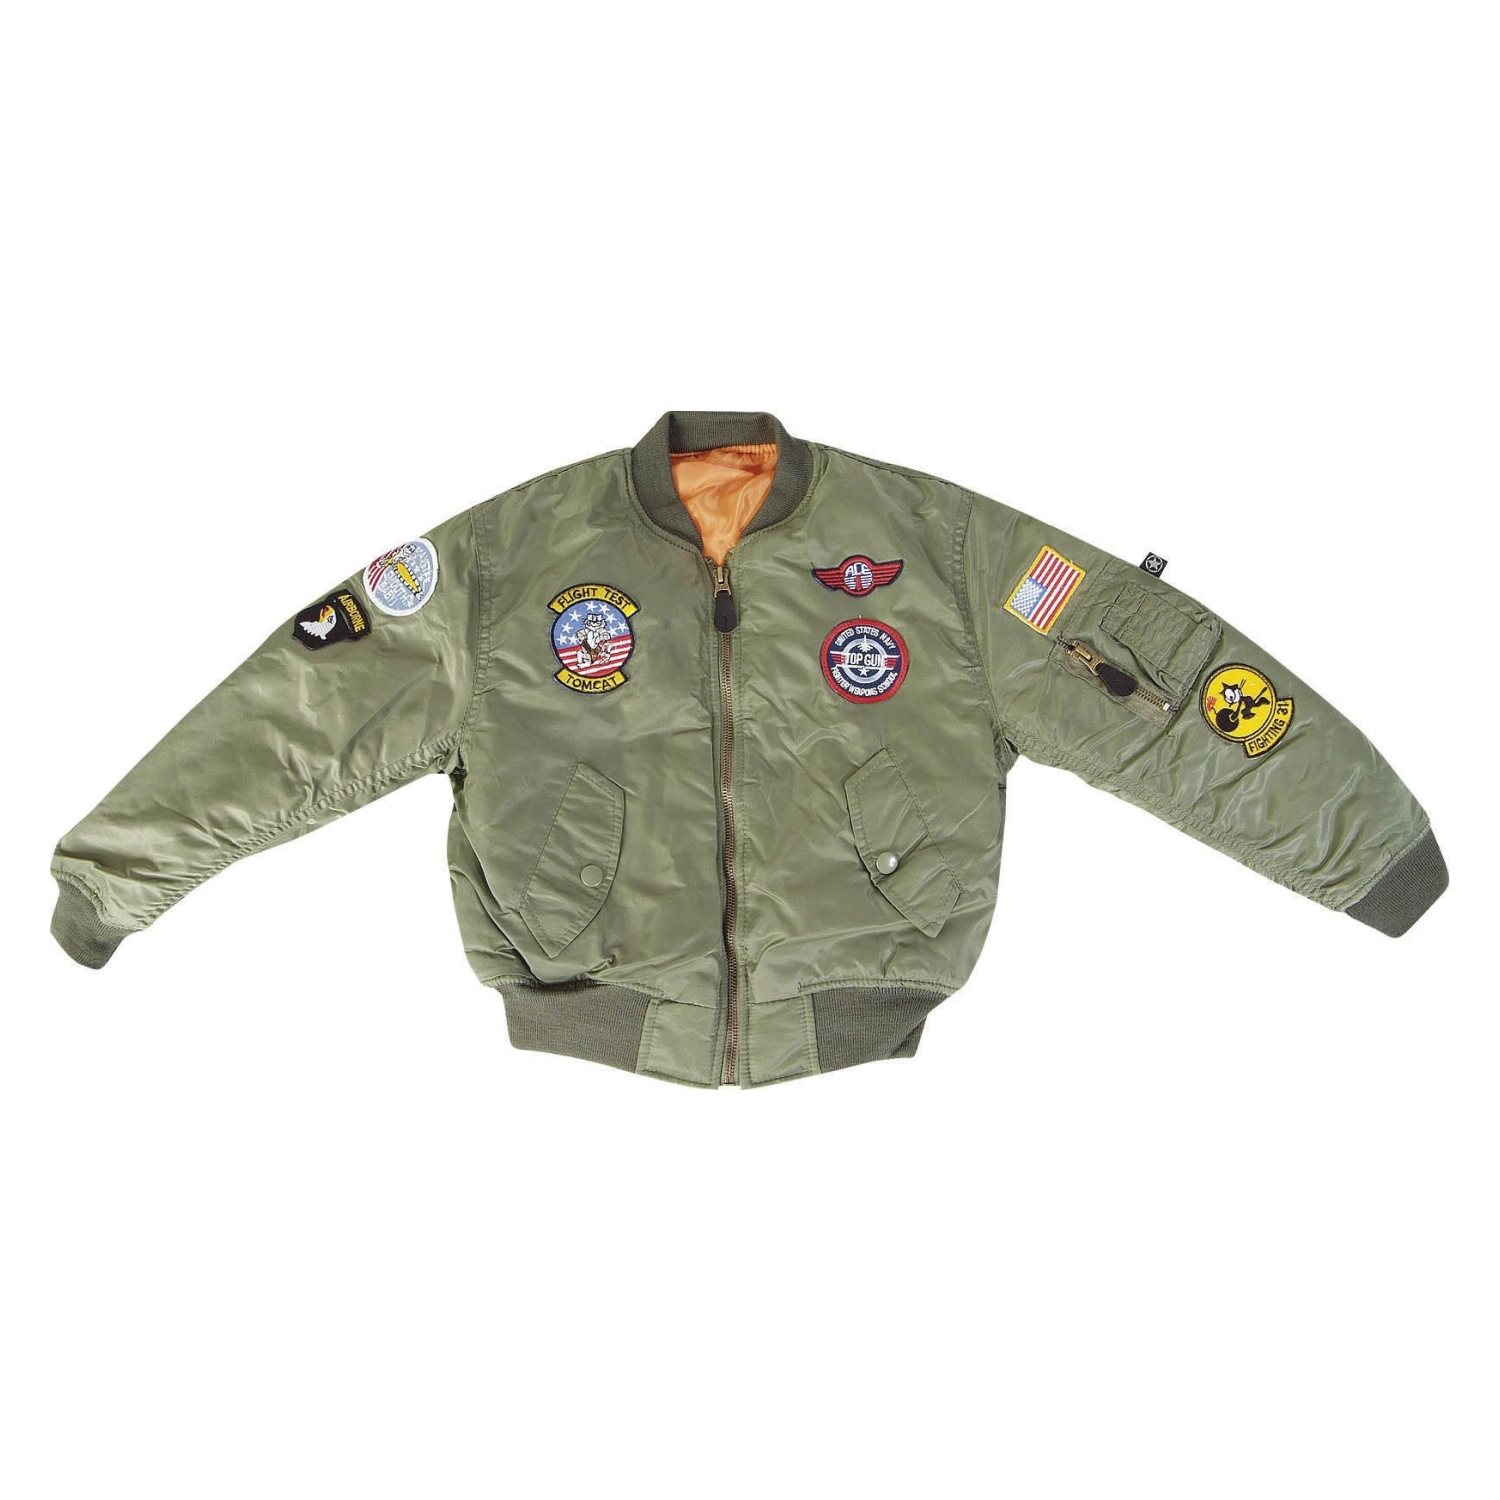 MA1 jacket with patches OLIVE children MIL-COM KJKTMA1 L-11